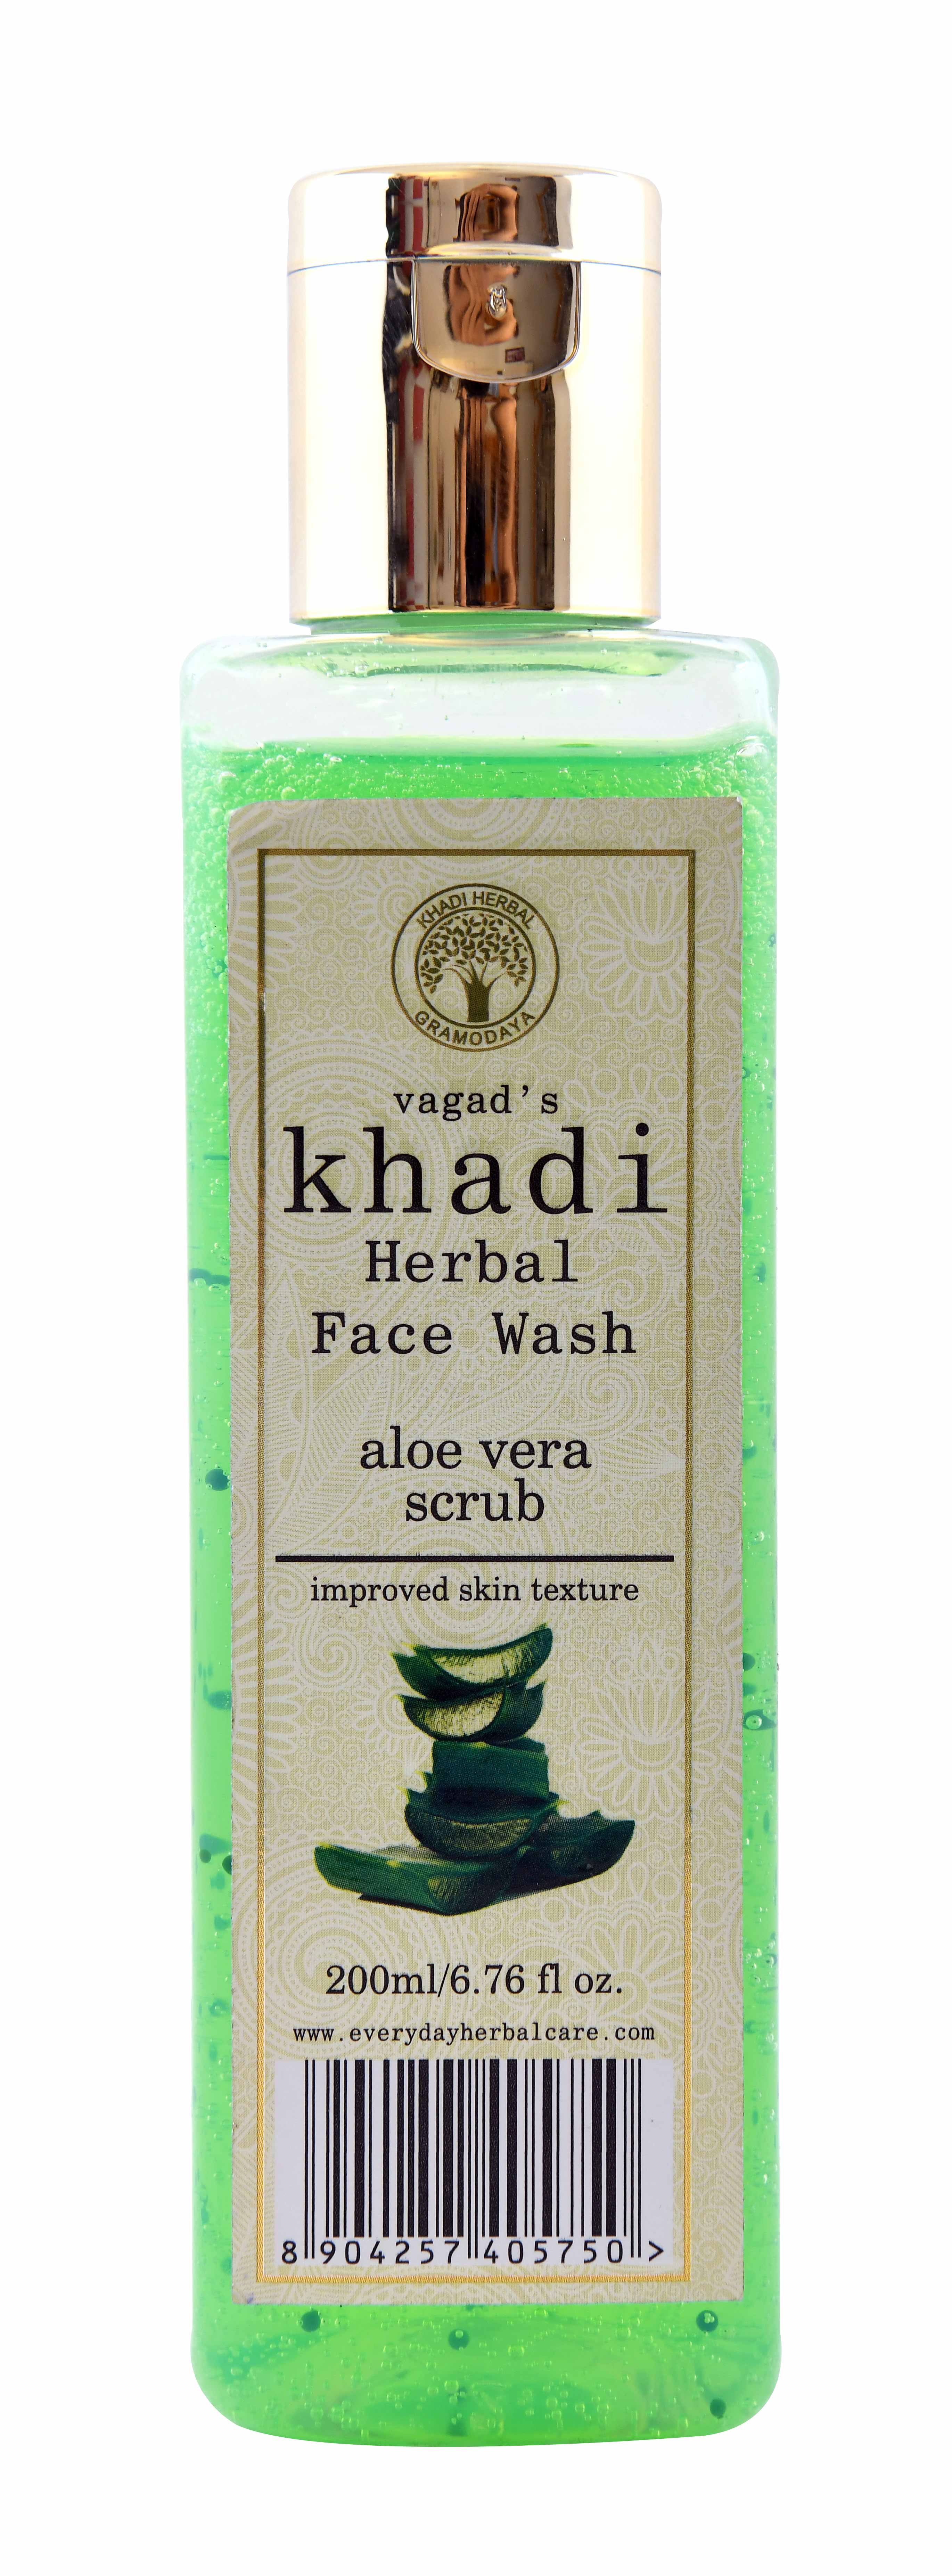 Vagad's Khadi Aloevera Scrub Face Wash